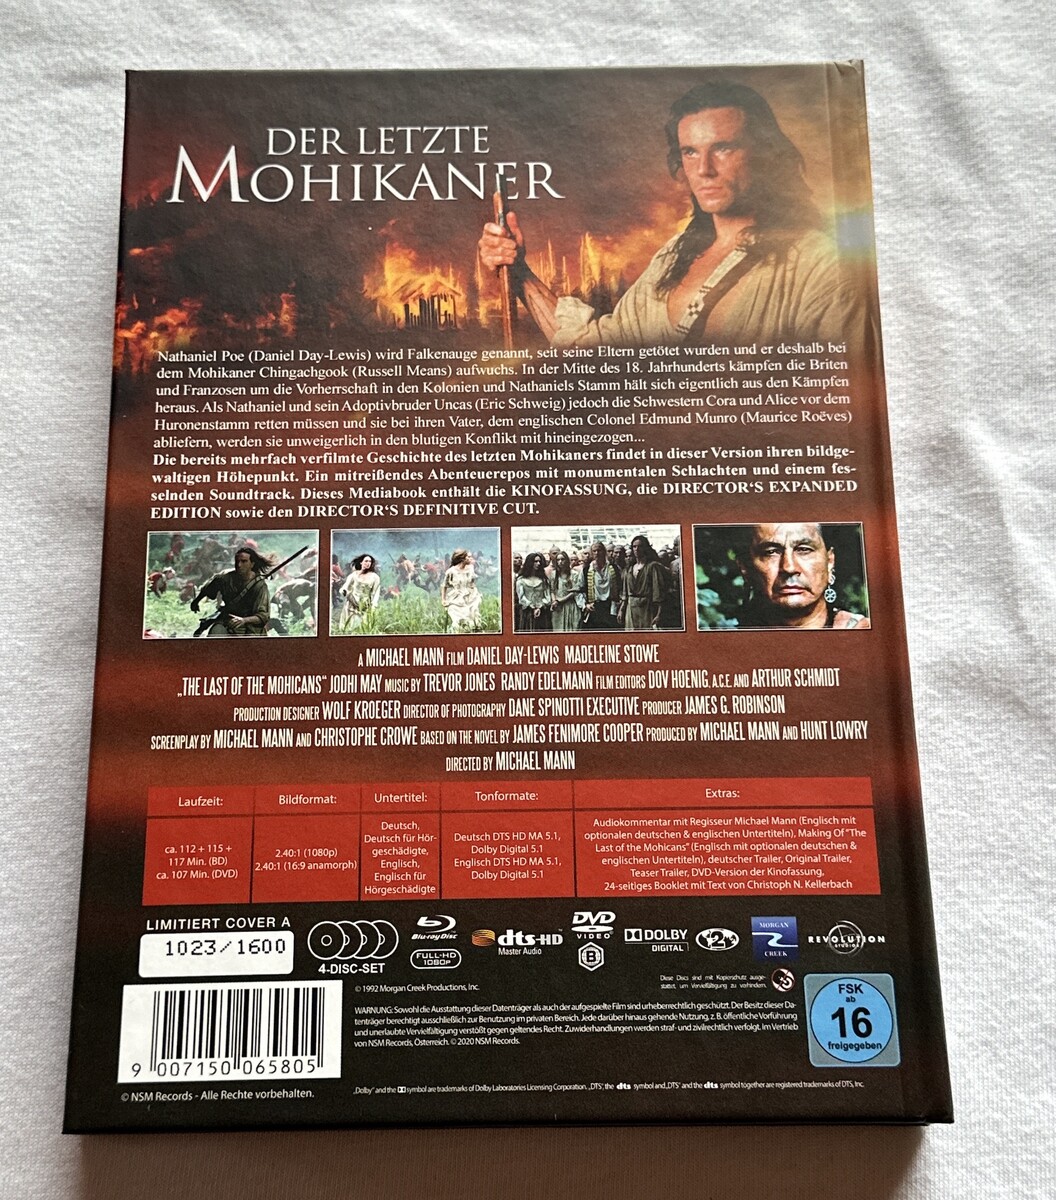 Blu-ray * DER LETZTE MOHIKANER (1992) * Michael Mann * Mediabook